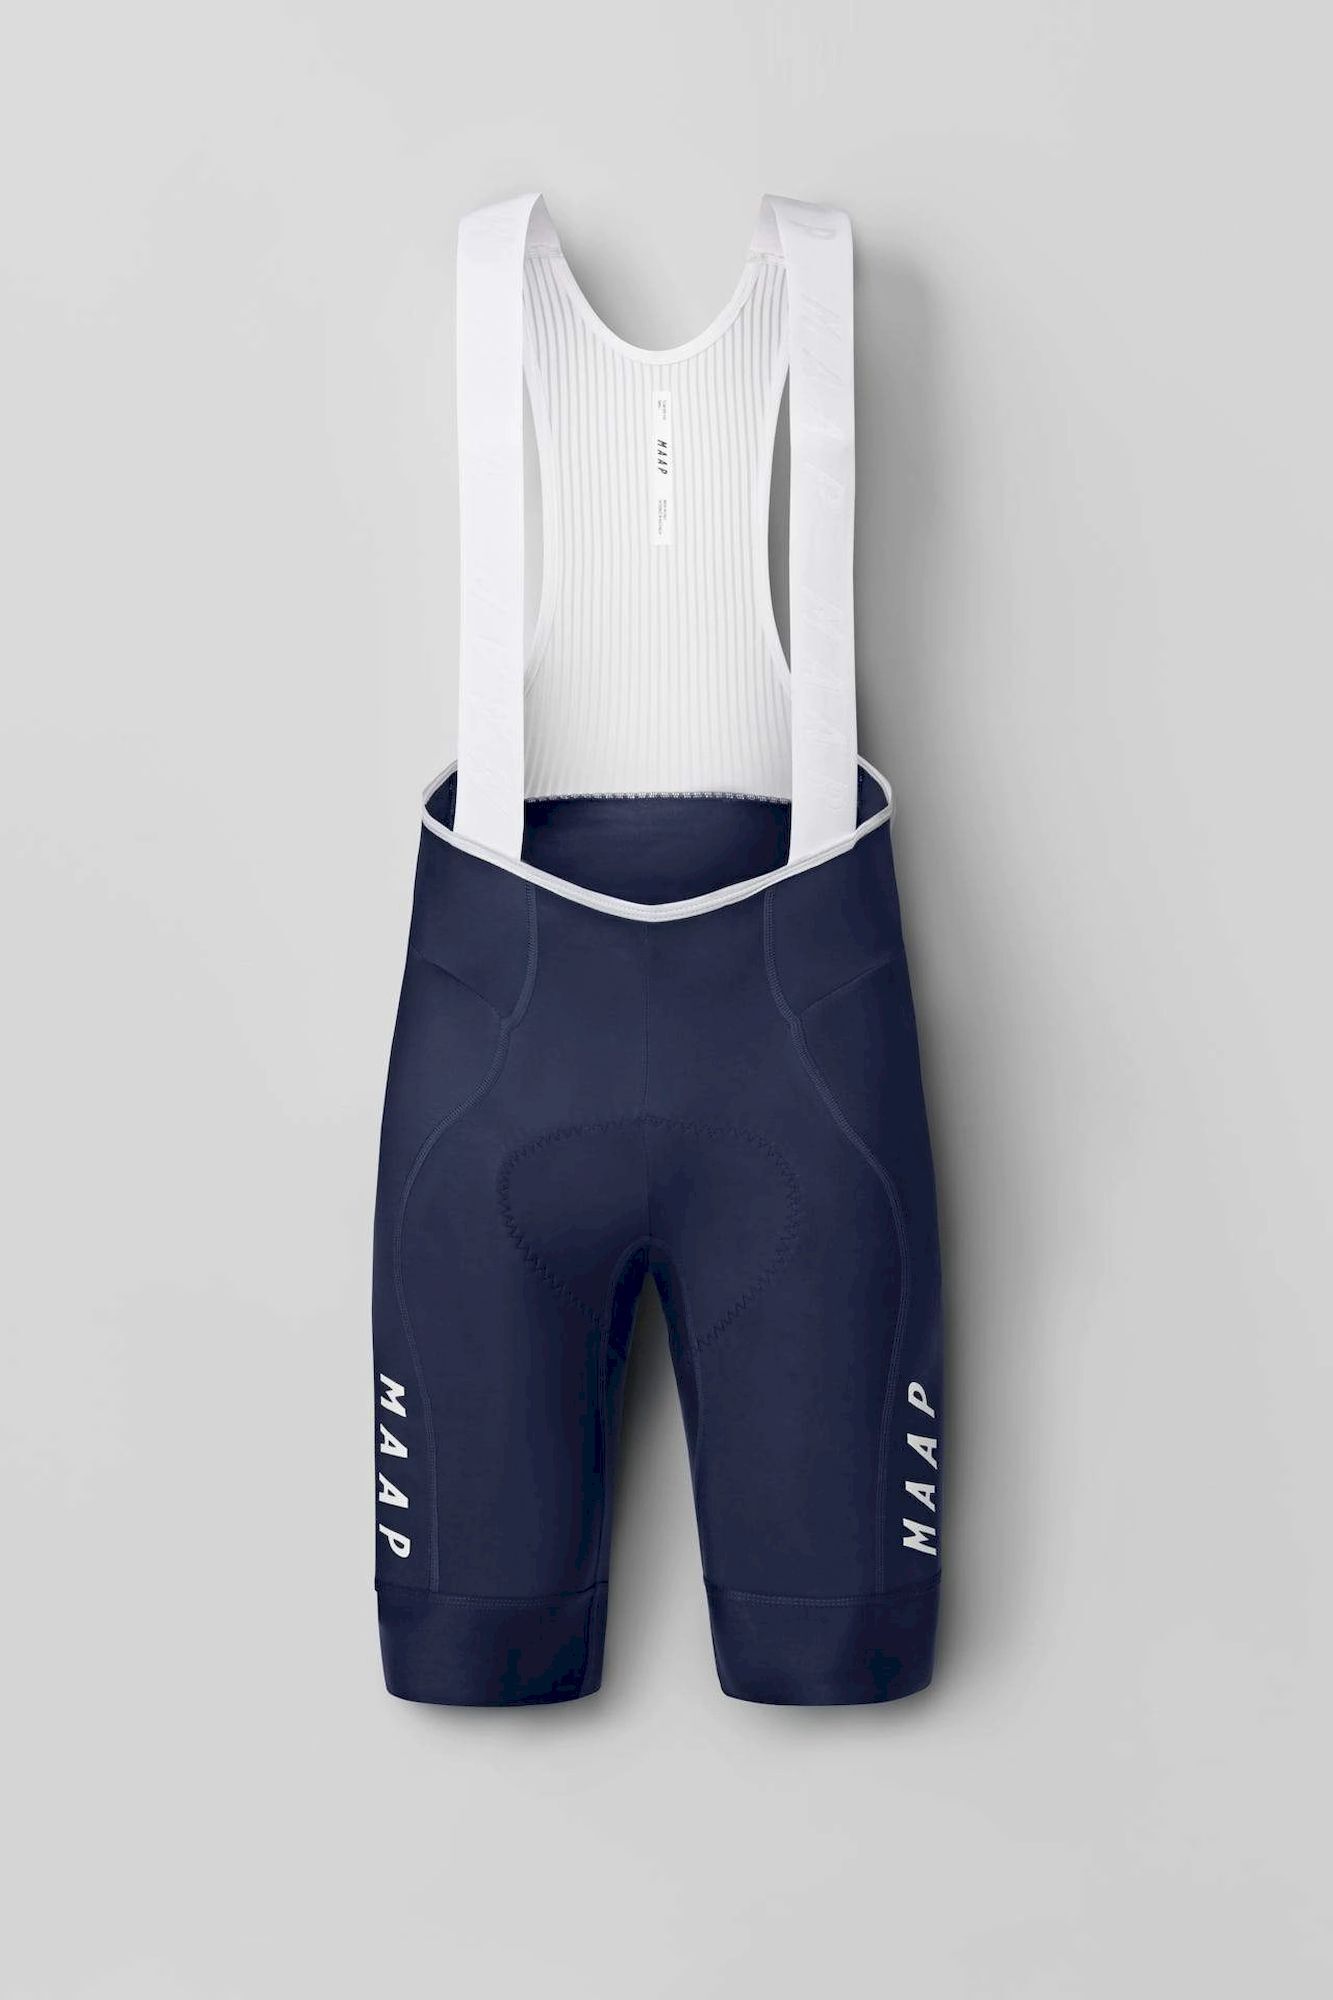 Maap Team Bib Evo - Cycling shorts - Men's | Hardloop